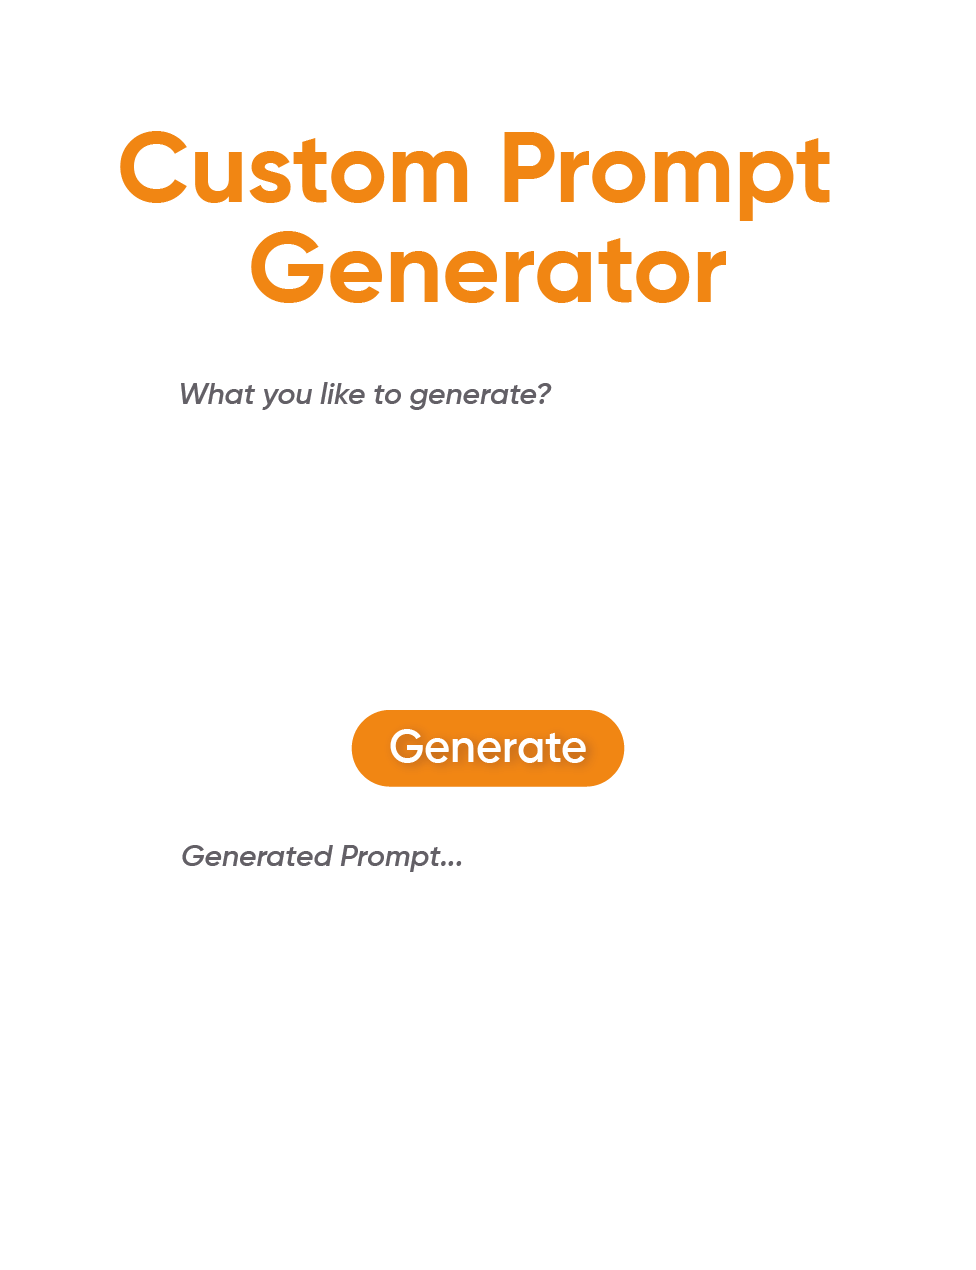 Why use Ettvi's AI Custom Prompts Generator